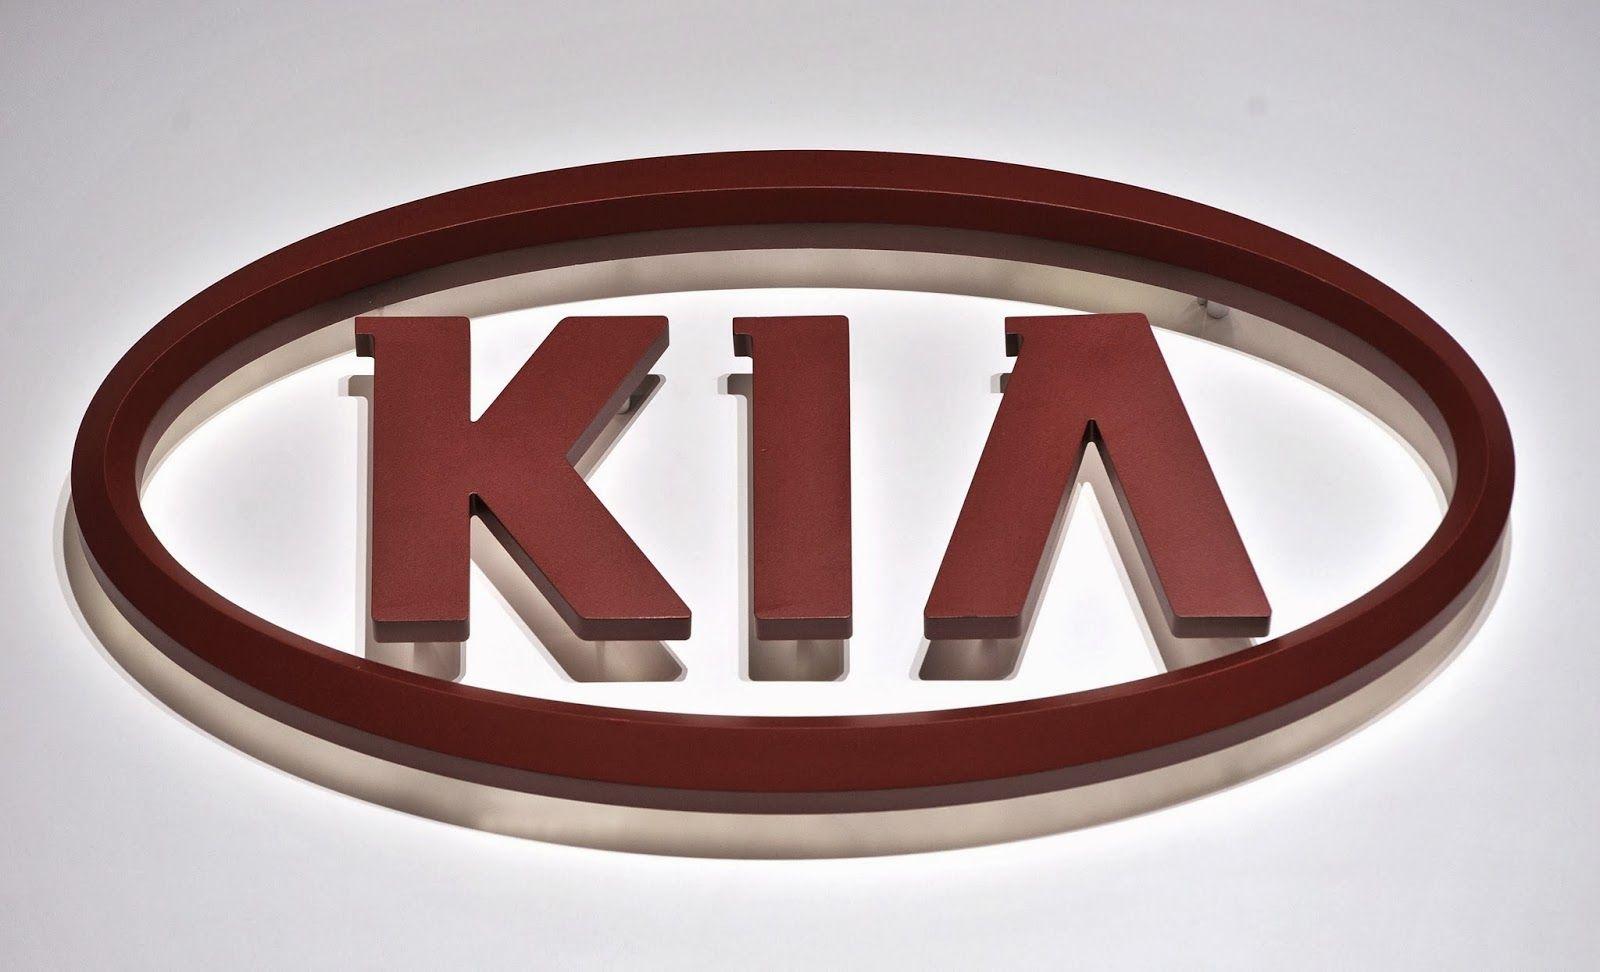 Red and White Oval Car Logo - Kia Logo, Kia Car Symbol Meaning and History | Car Brand Names.com